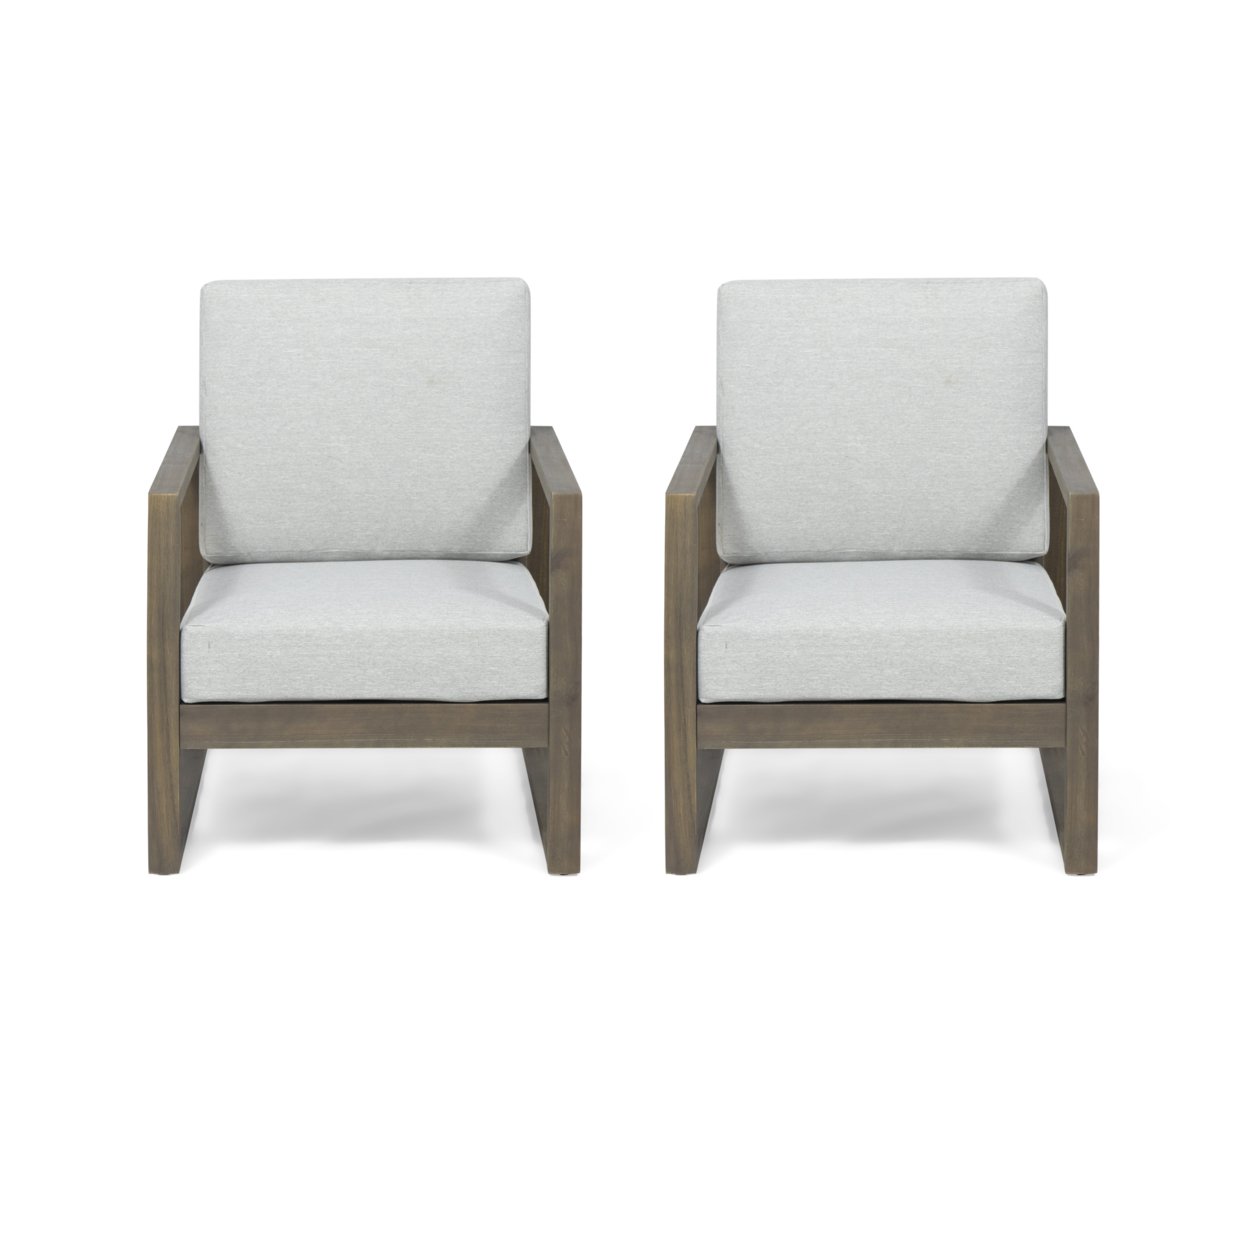 Mavis Outdoor Acacia Wood Club Chair With Cushions (Set Of 2) - Gray Finish, Light Gray